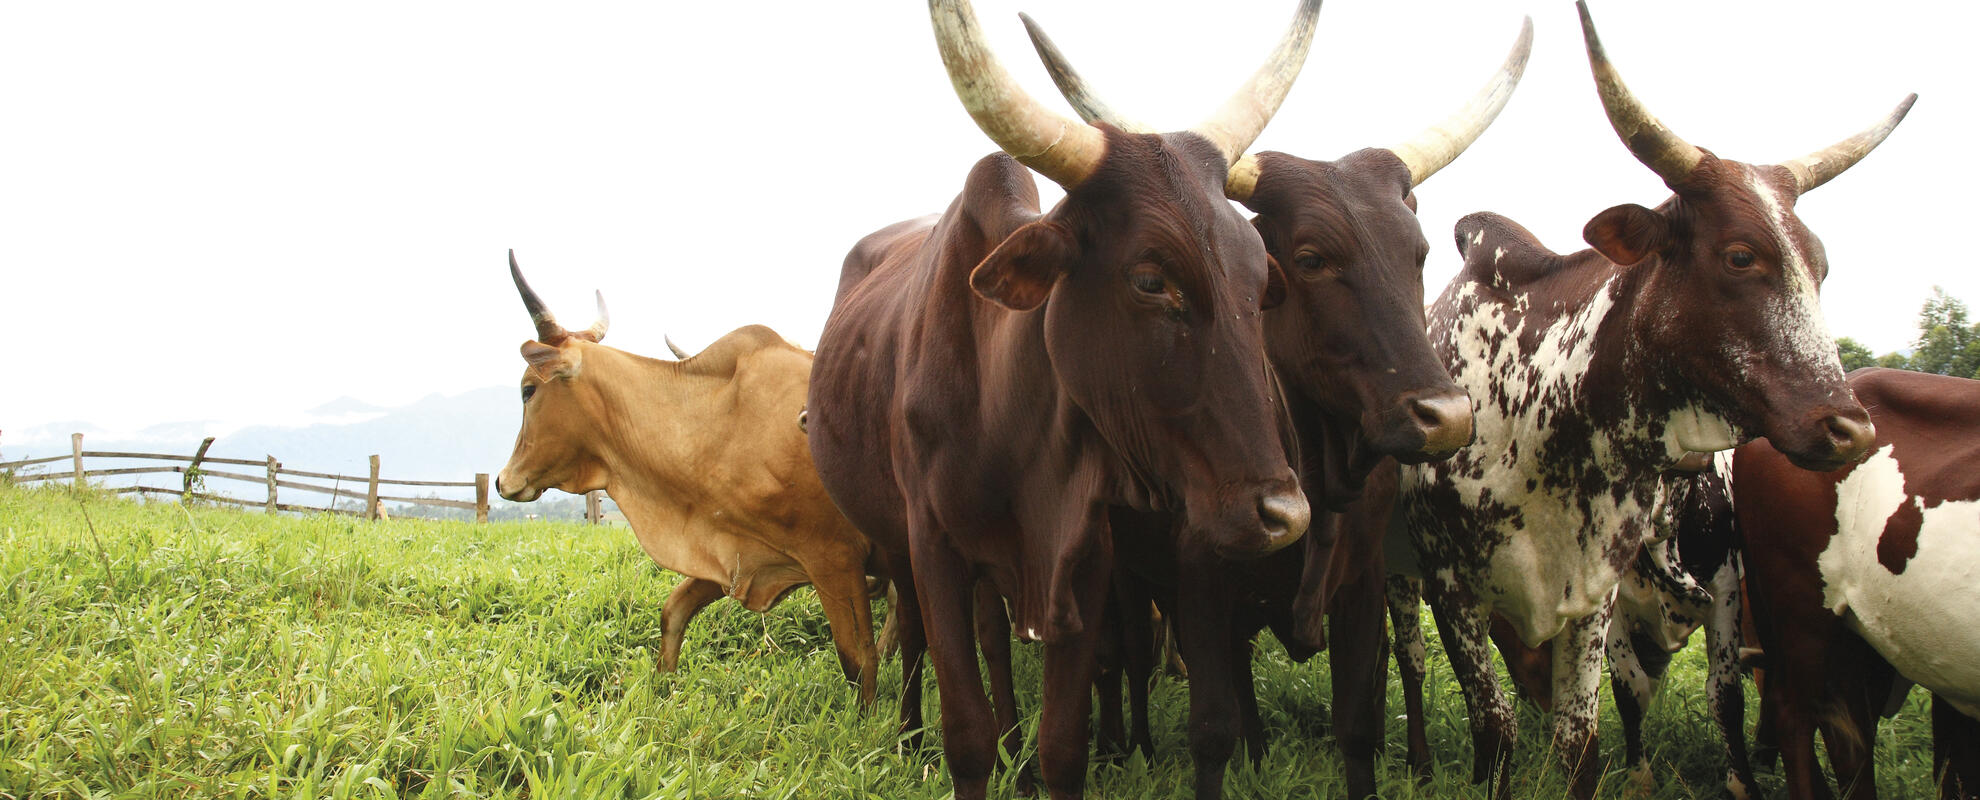 Fulani, Cattle breed: Red & White Fulani. Location: Bamenda, Cameroon.